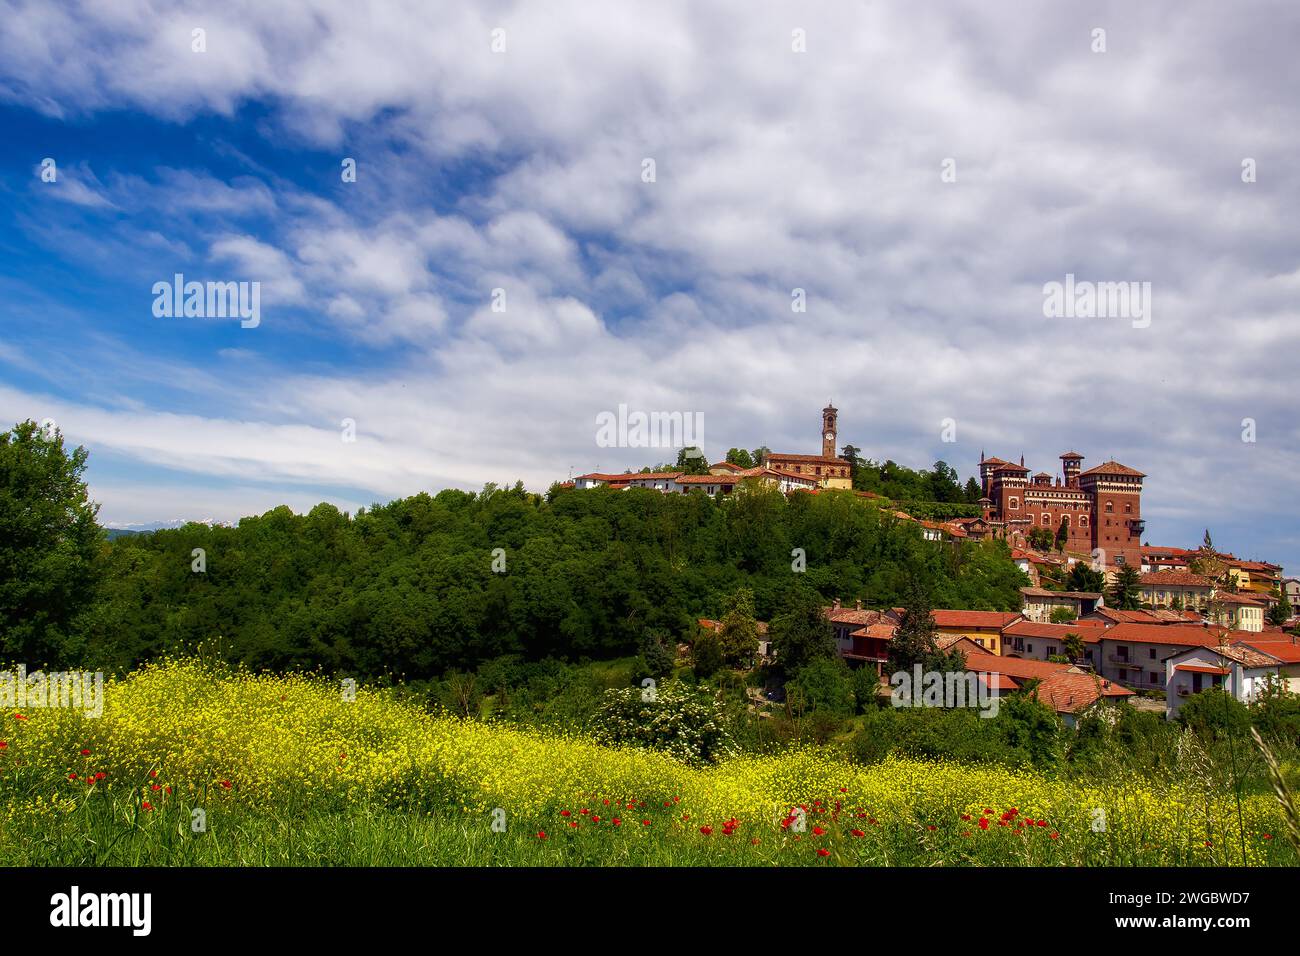 Fields in front of a Hilltop village, Cereseto Monferrato, Alessandria, Piedmont, Italy Stock Photo